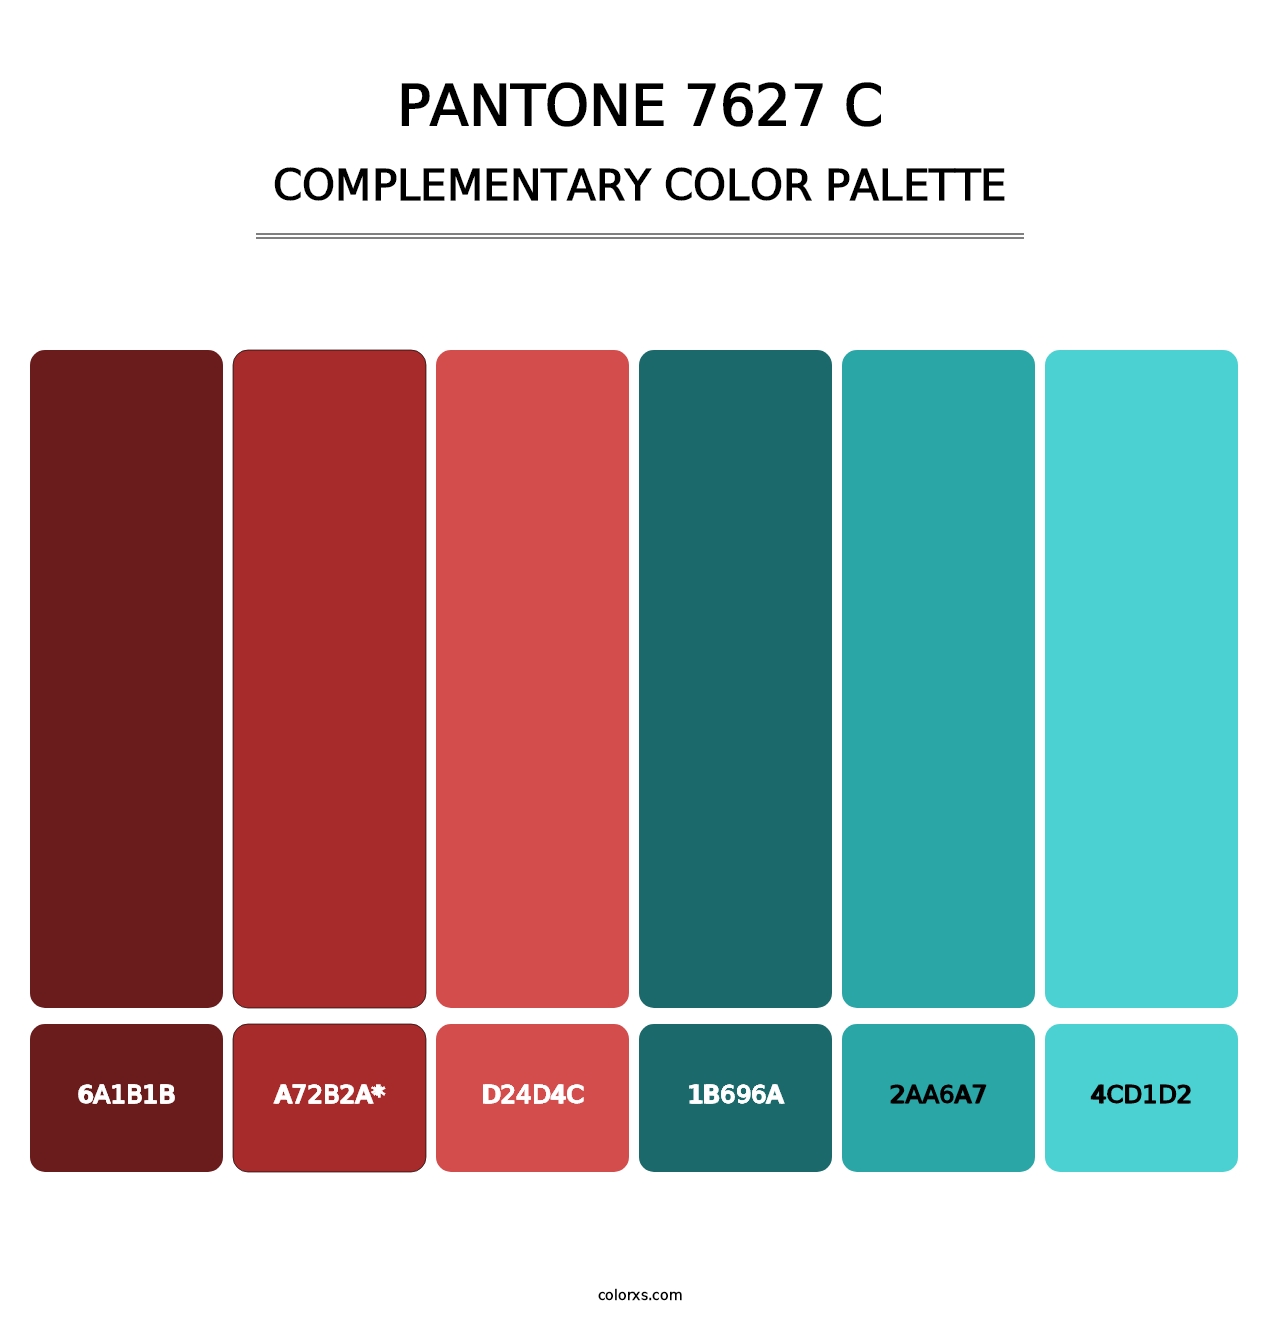 PANTONE 7627 C - Complementary Color Palette